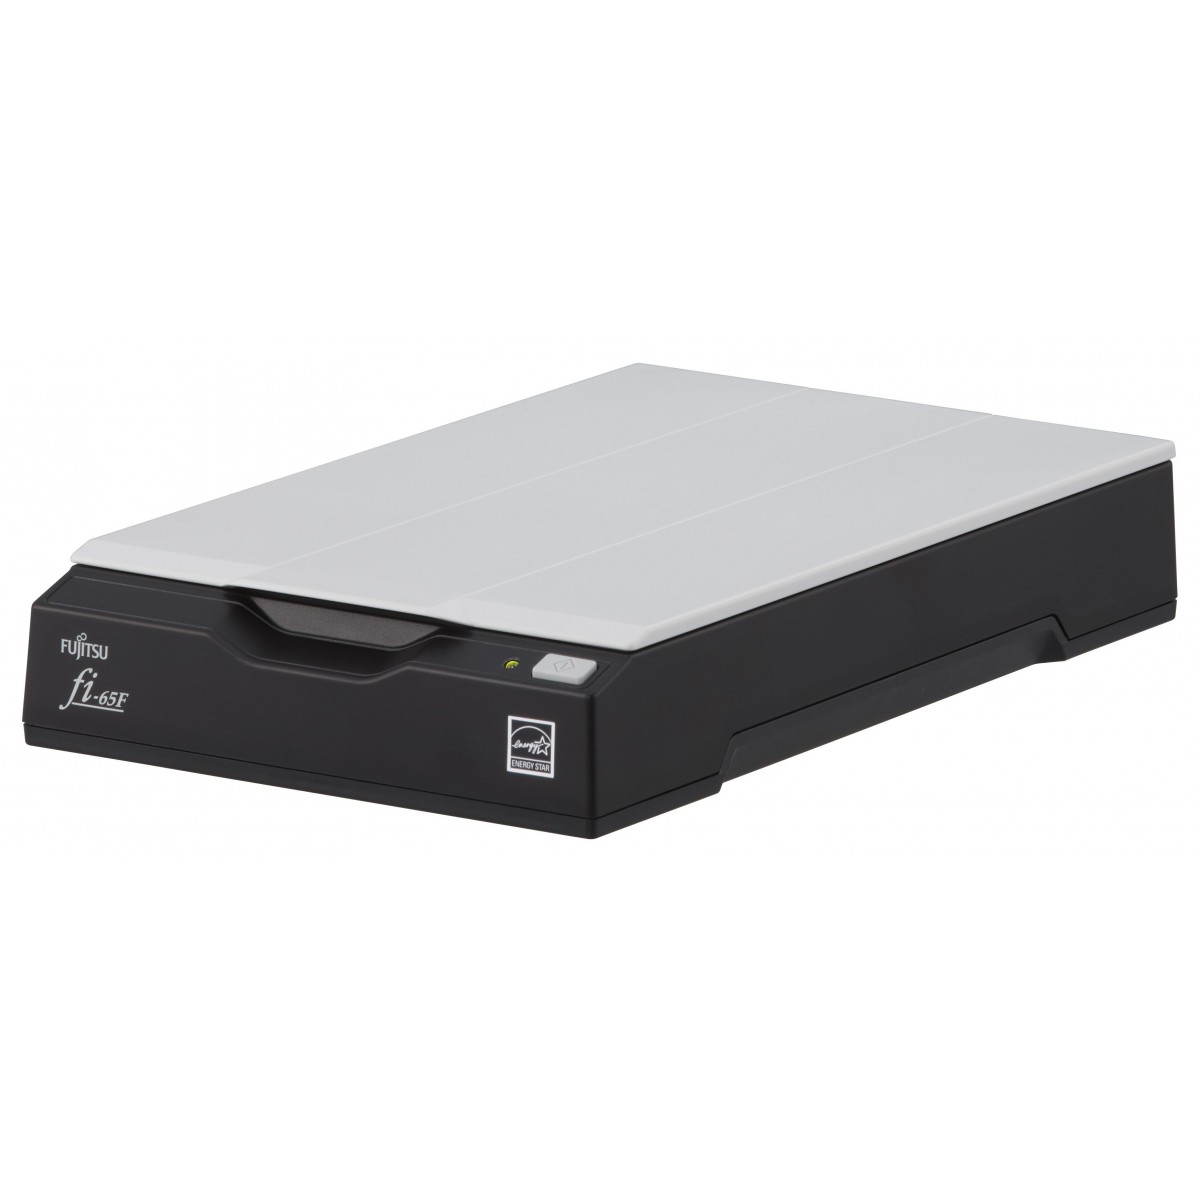 Fujitsu fi-65F - 105 x 148 mm - 600 x 600 DPI - 24 bit - Grayscale - Monochrome - Flatbed scanner - Black - Grey